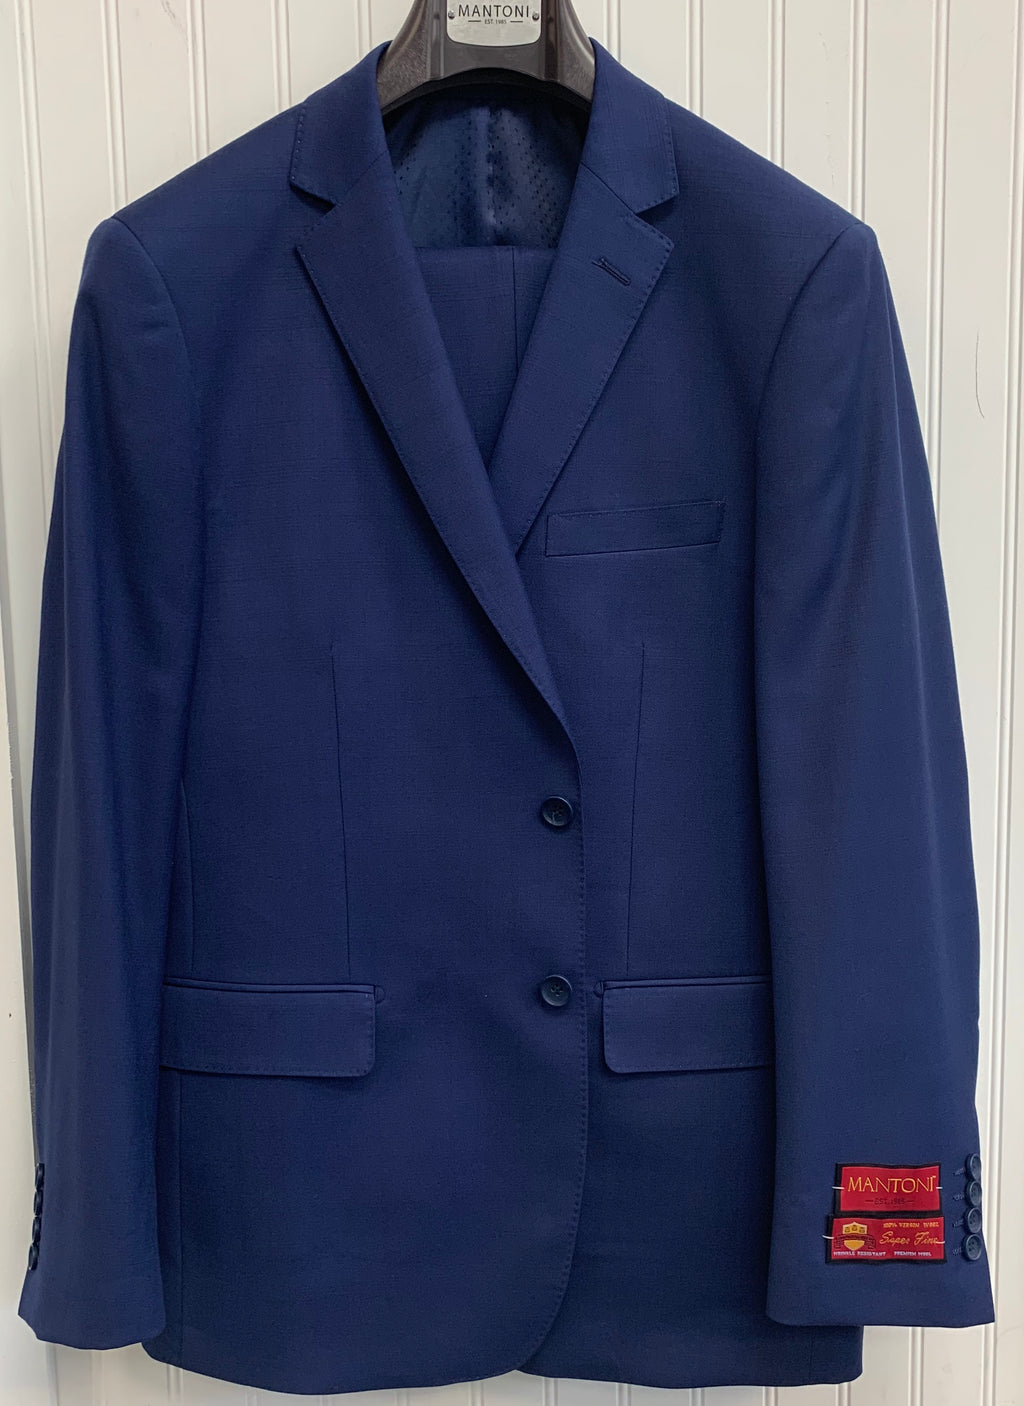 Mantoni Super 140 Wool Suit- 87146-1 (Navy Tonal Plaid)